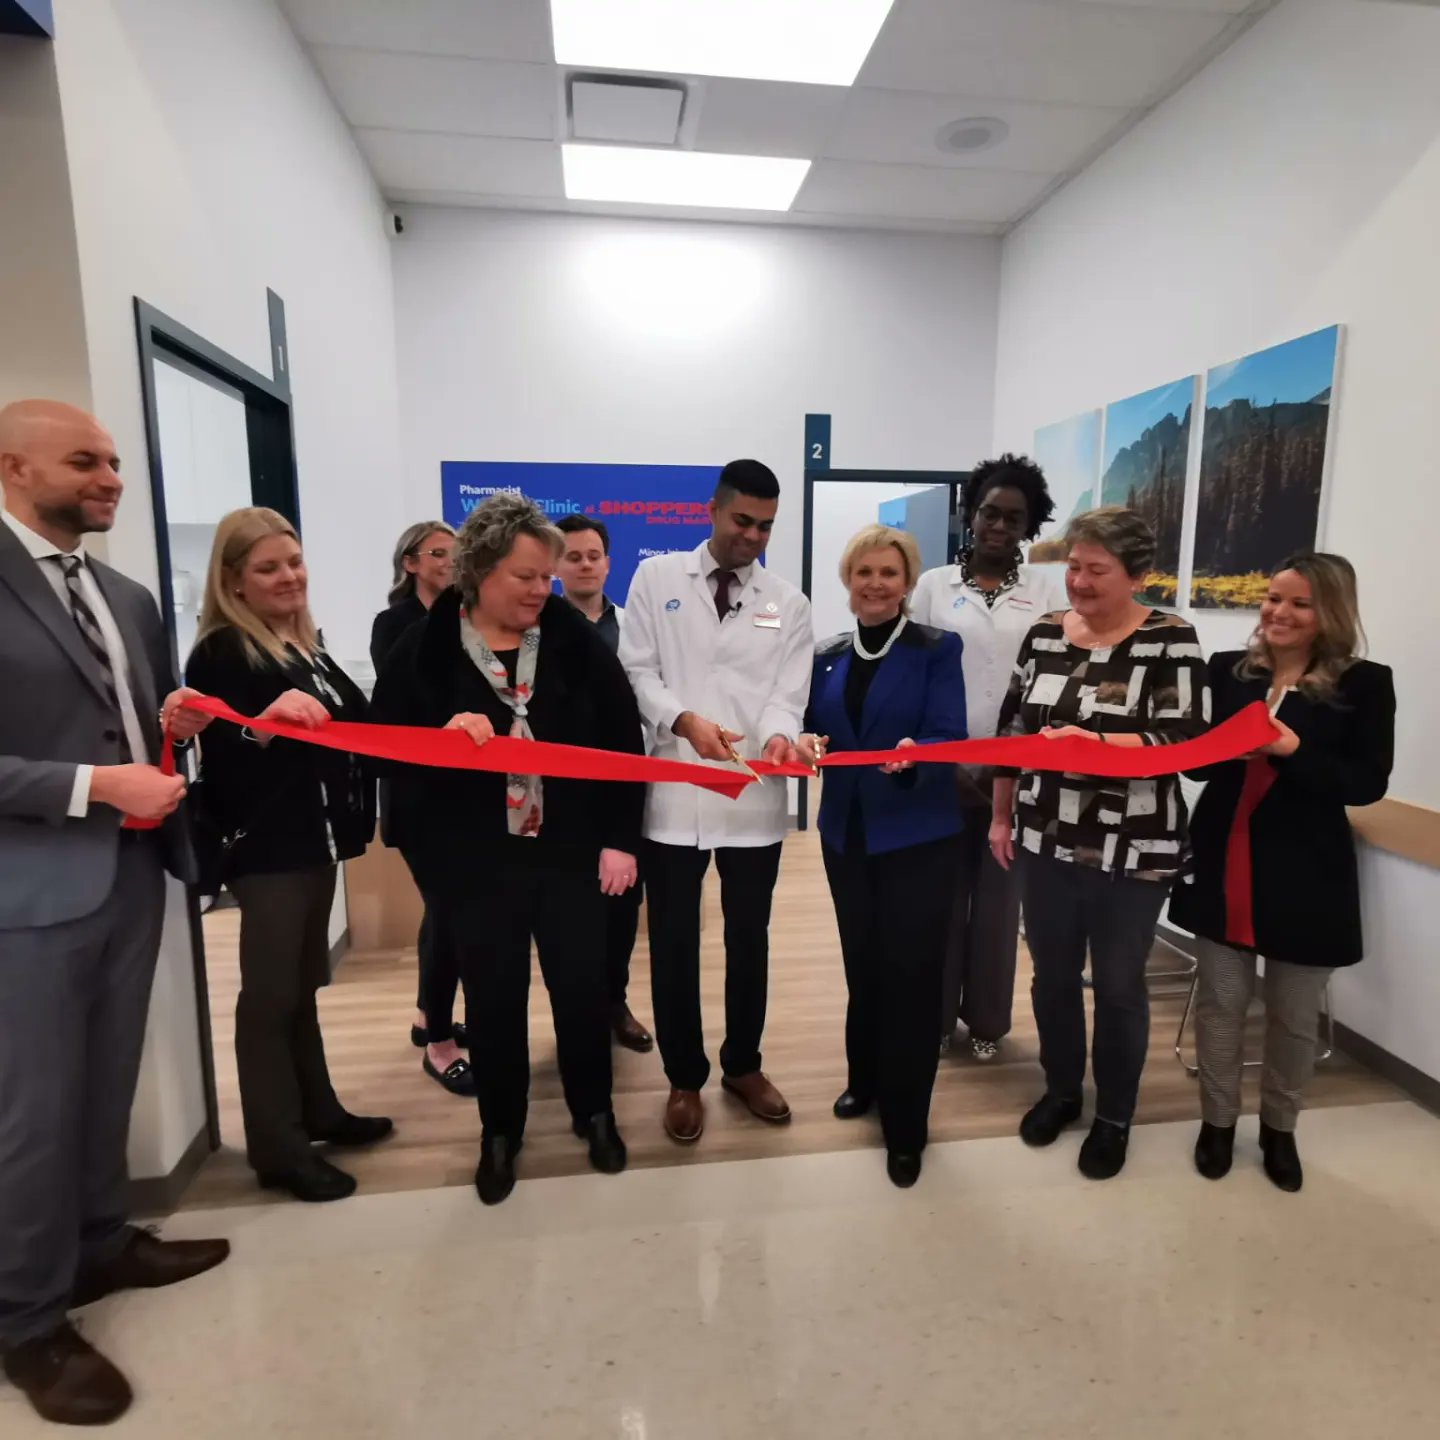 The Fort Saskatchewan pharmacy walk-in clinic is opened. Image: Raj Bharadia via Twitter.